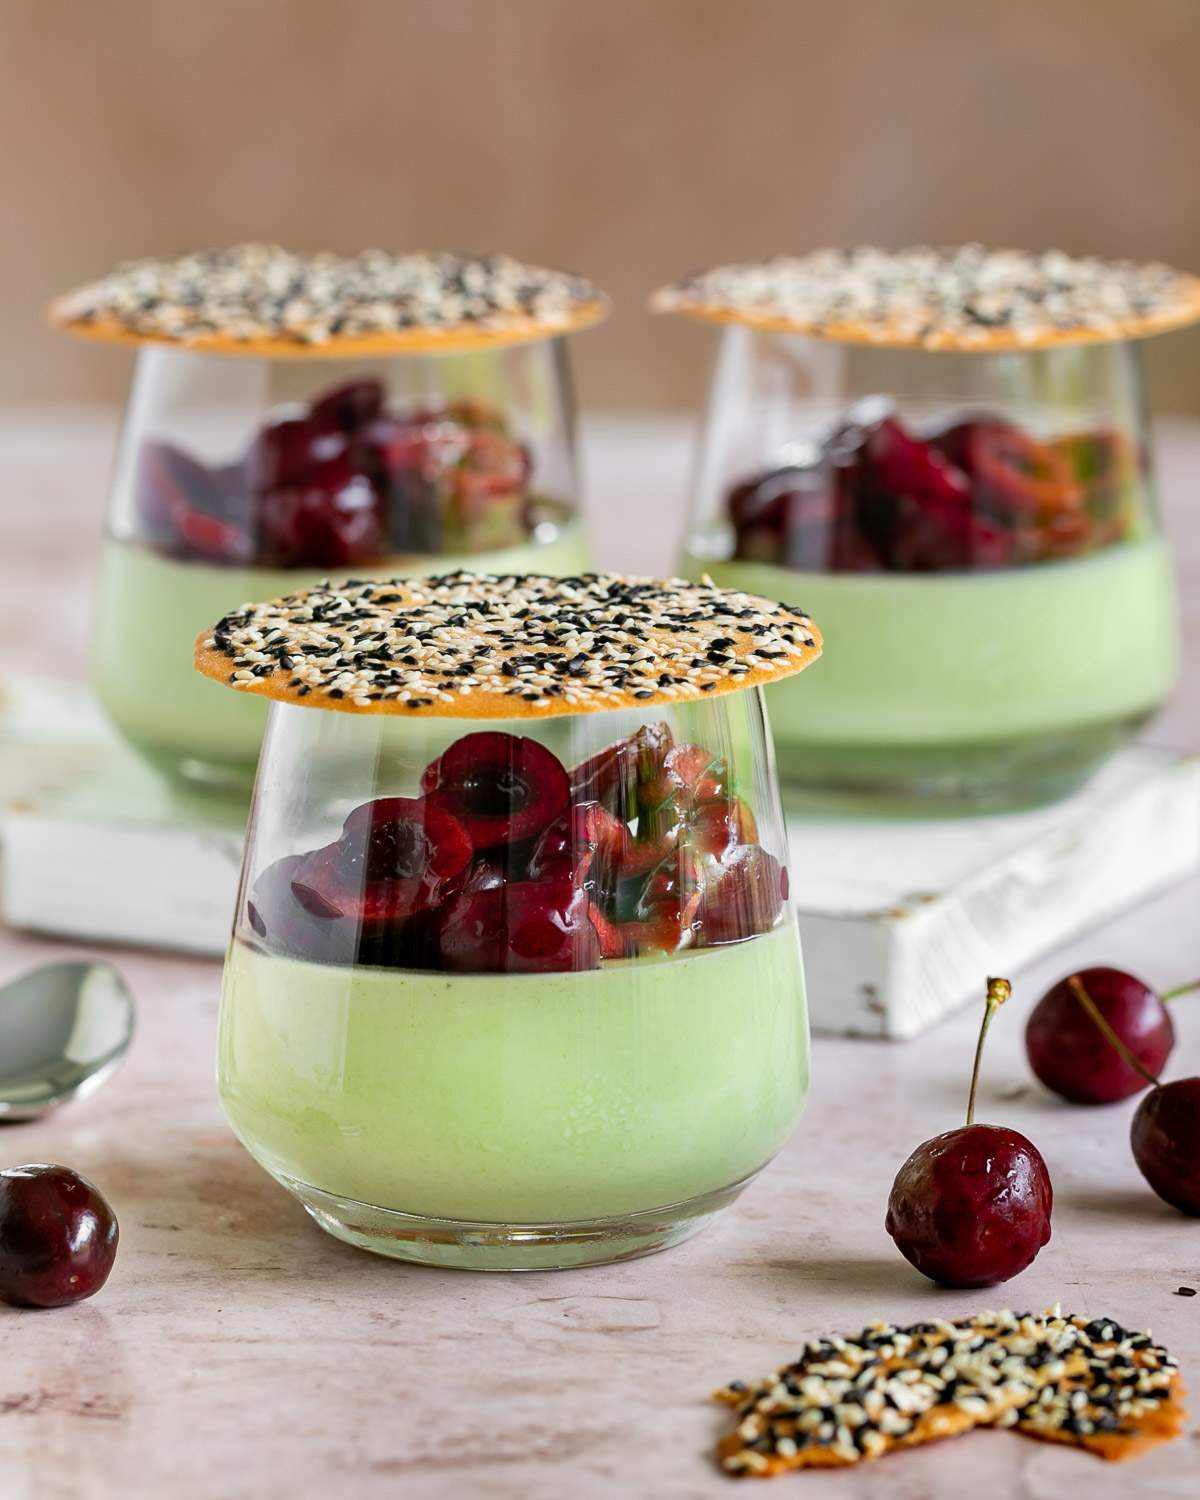 Green Tea Matcha Panna Cotta with Marinated Cherries